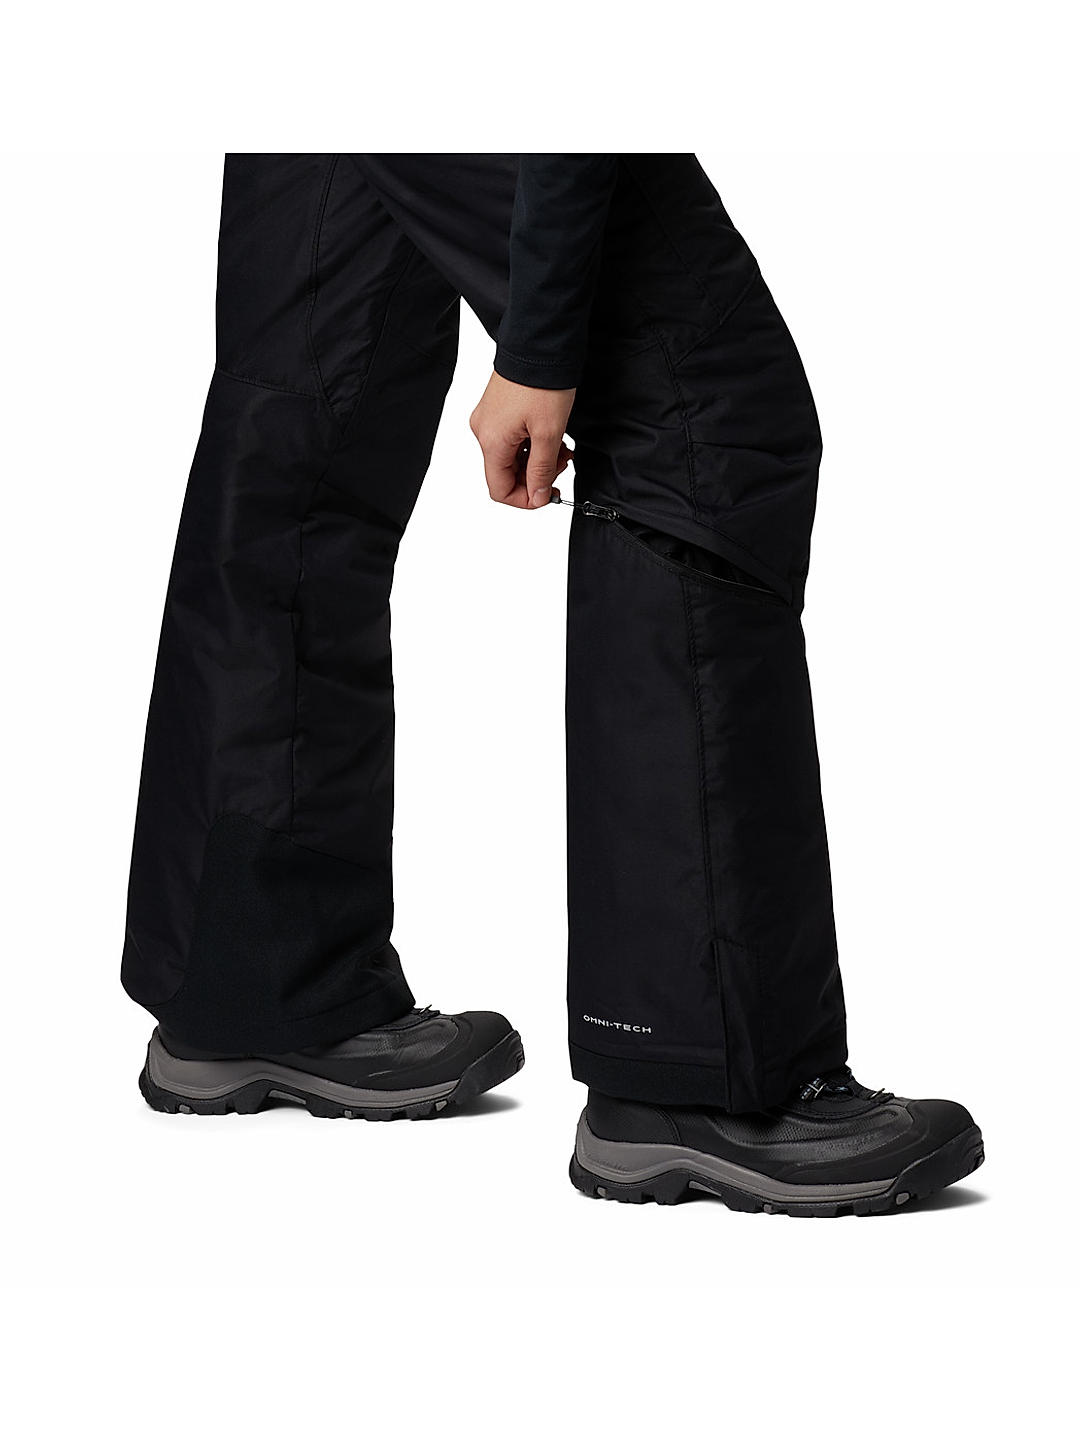 Columbia Titanium Snow Ski Pants Womens XS Floral Print Black Adjustable  Waist | eBay